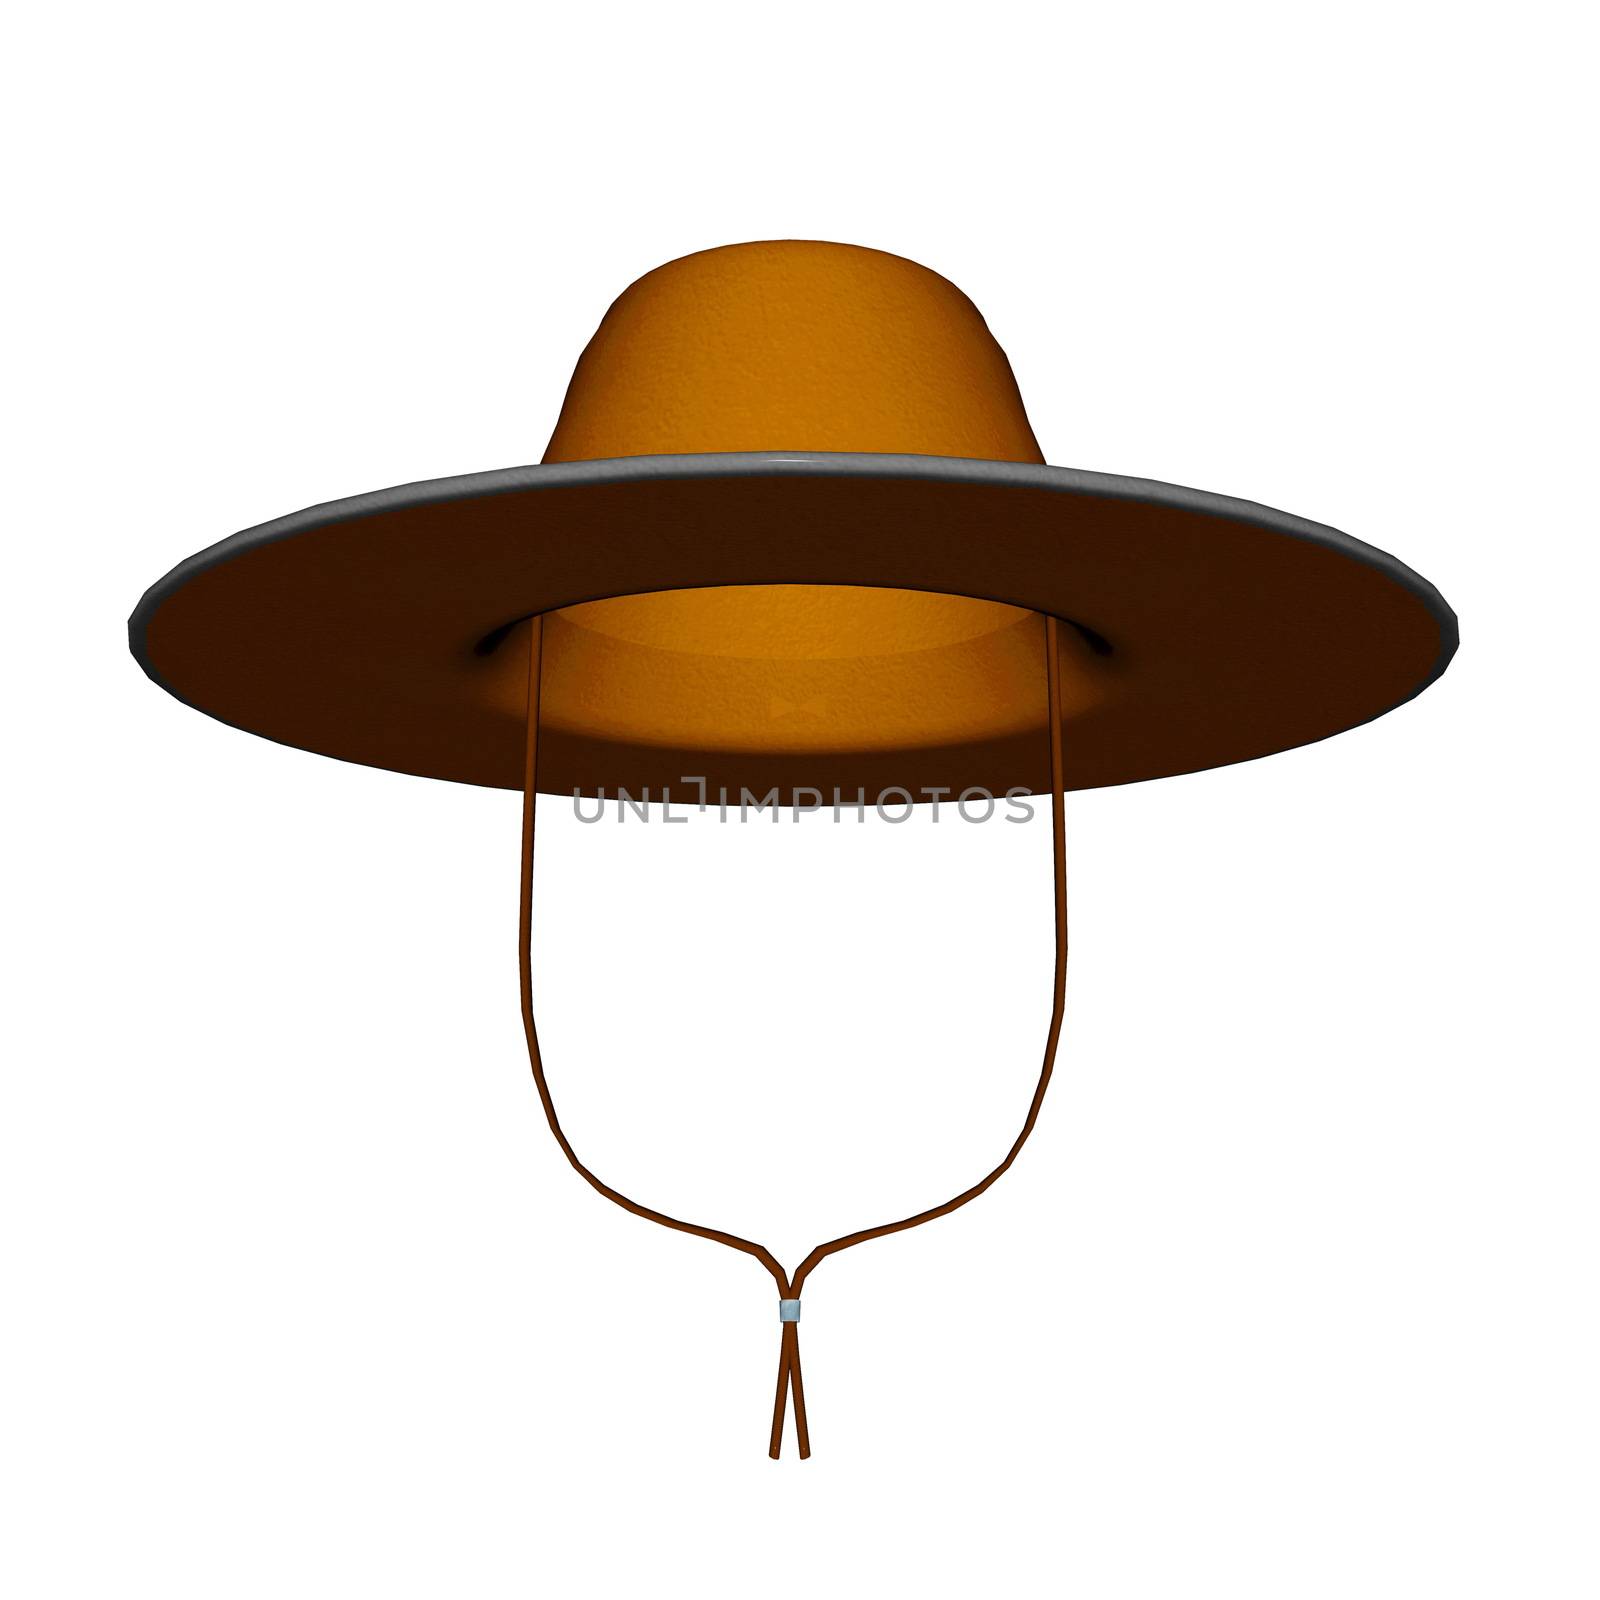 Cowboy hat - 3D render by Elenaphotos21